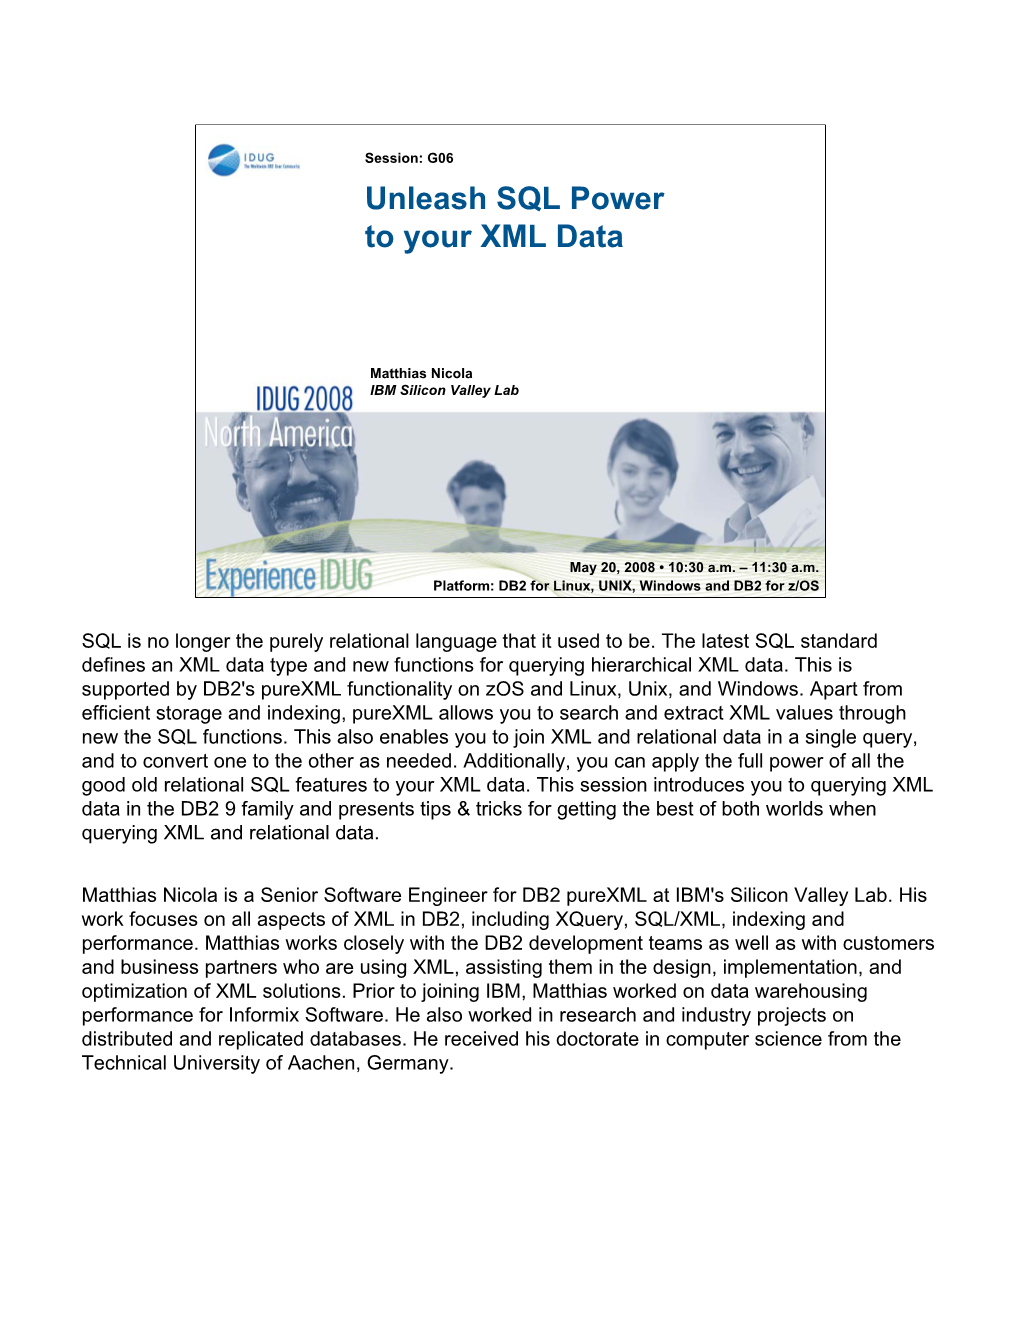 Unleash SQL Power to Your XML Data